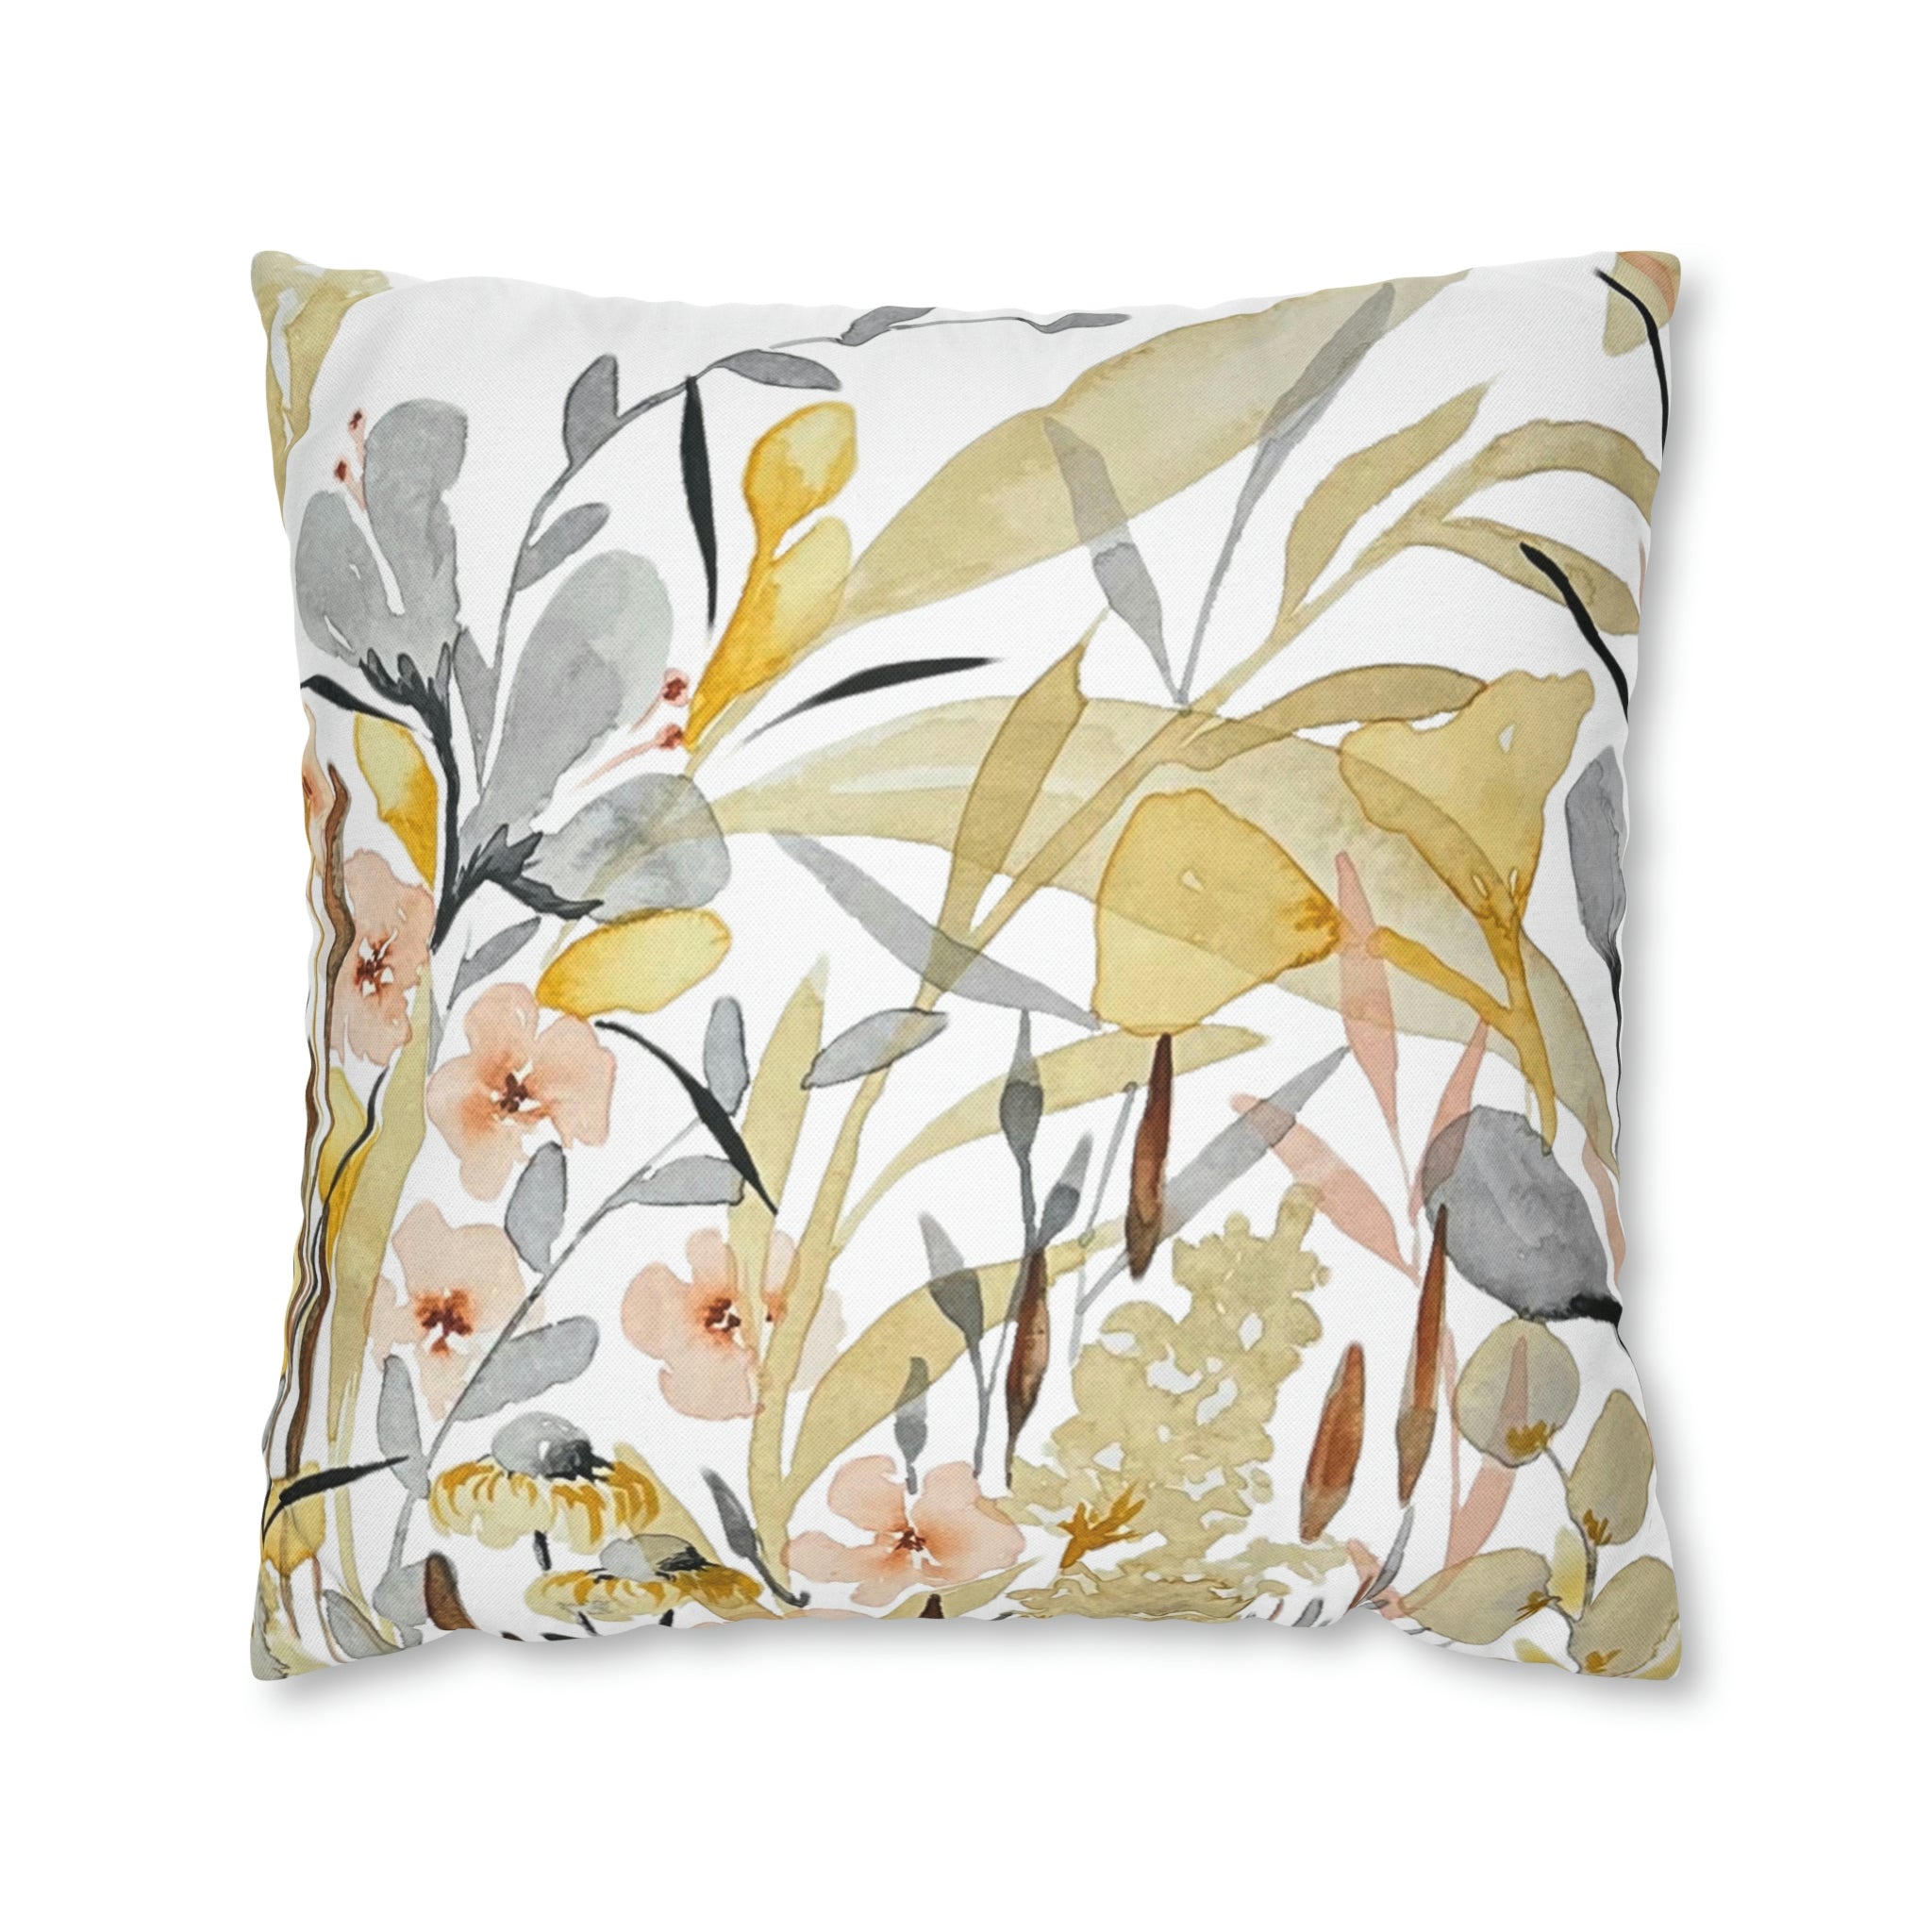 Soflora Botanical Garden Print on Throw Pillow Cover